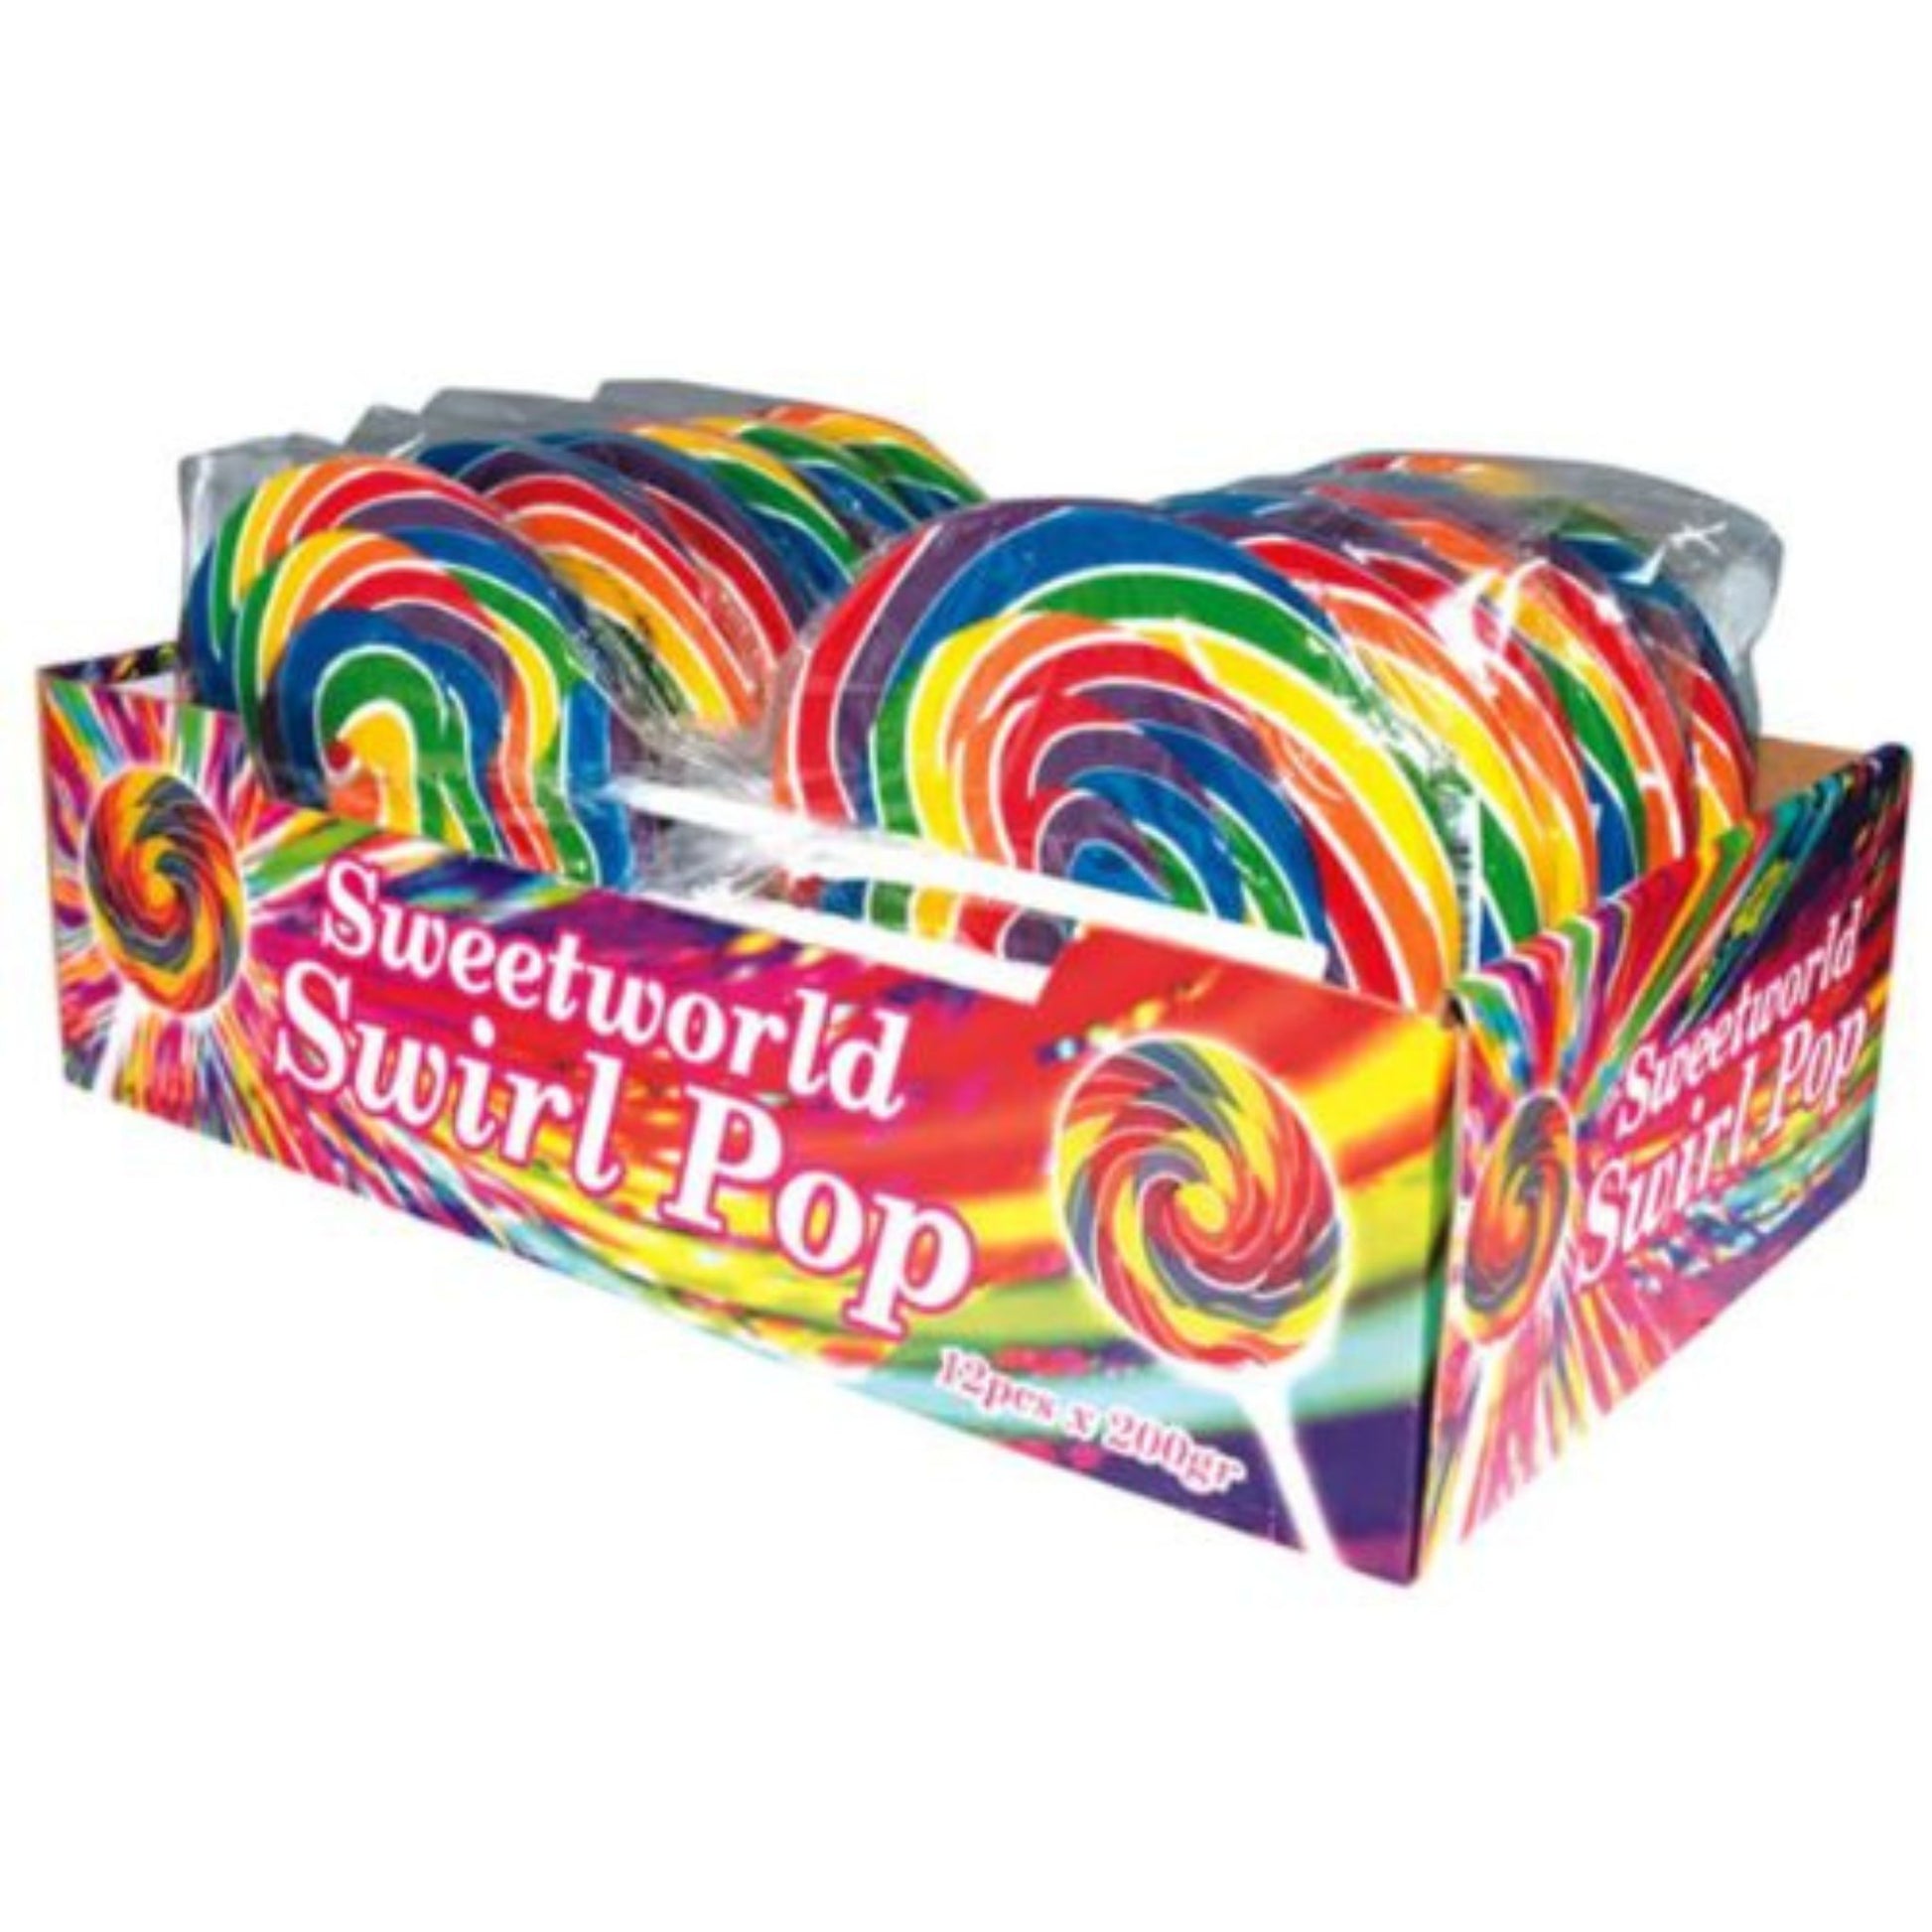 Sweetworld Swirl Pop - 200g